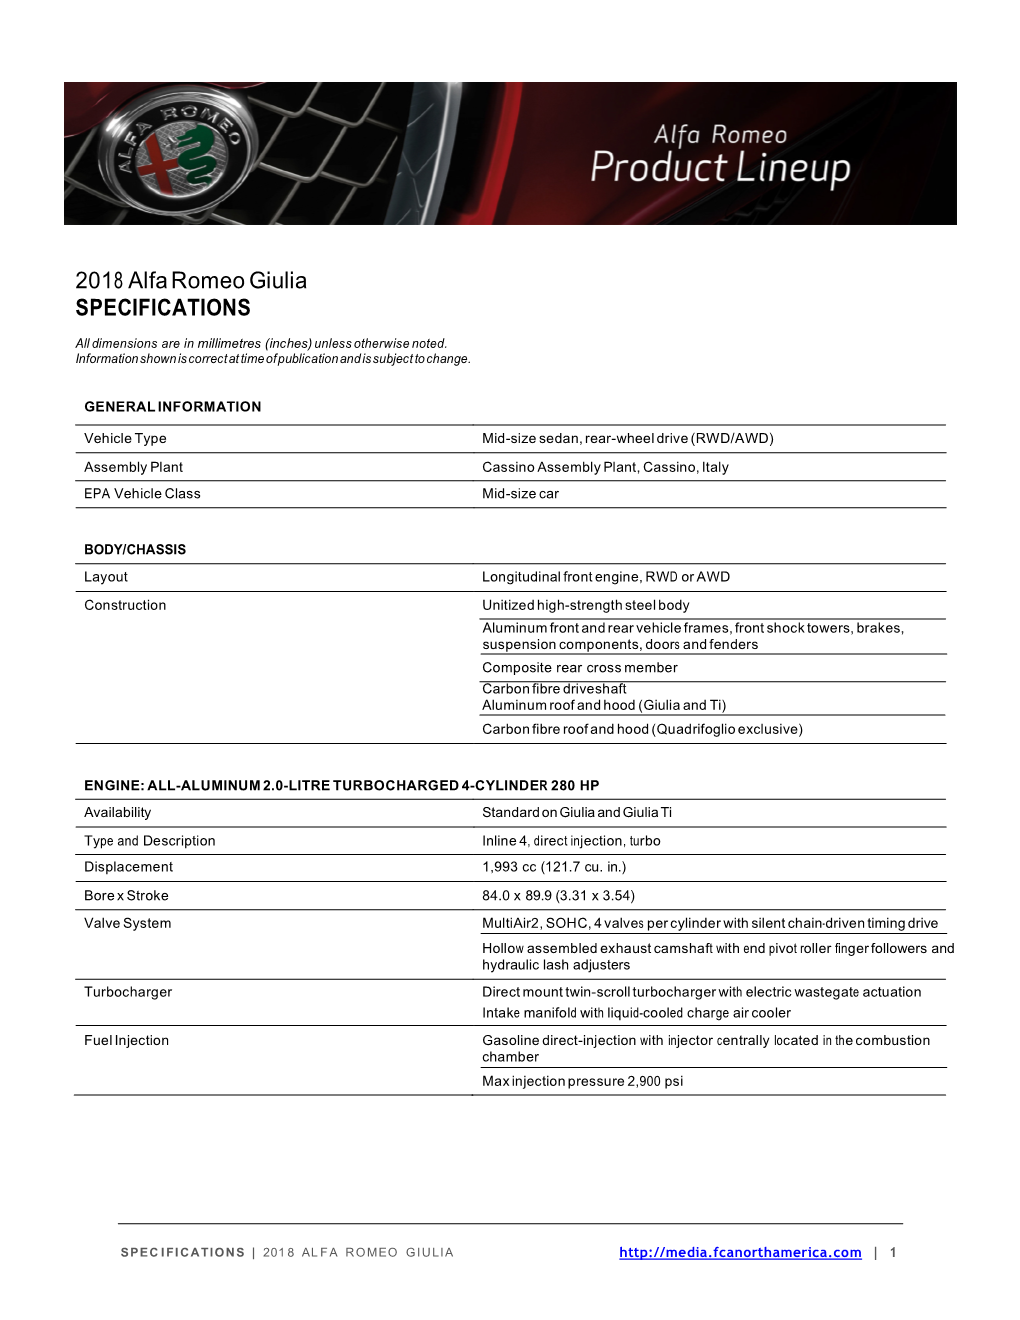 2018 Alfa Romeo Giulia SPECIFICATIONS